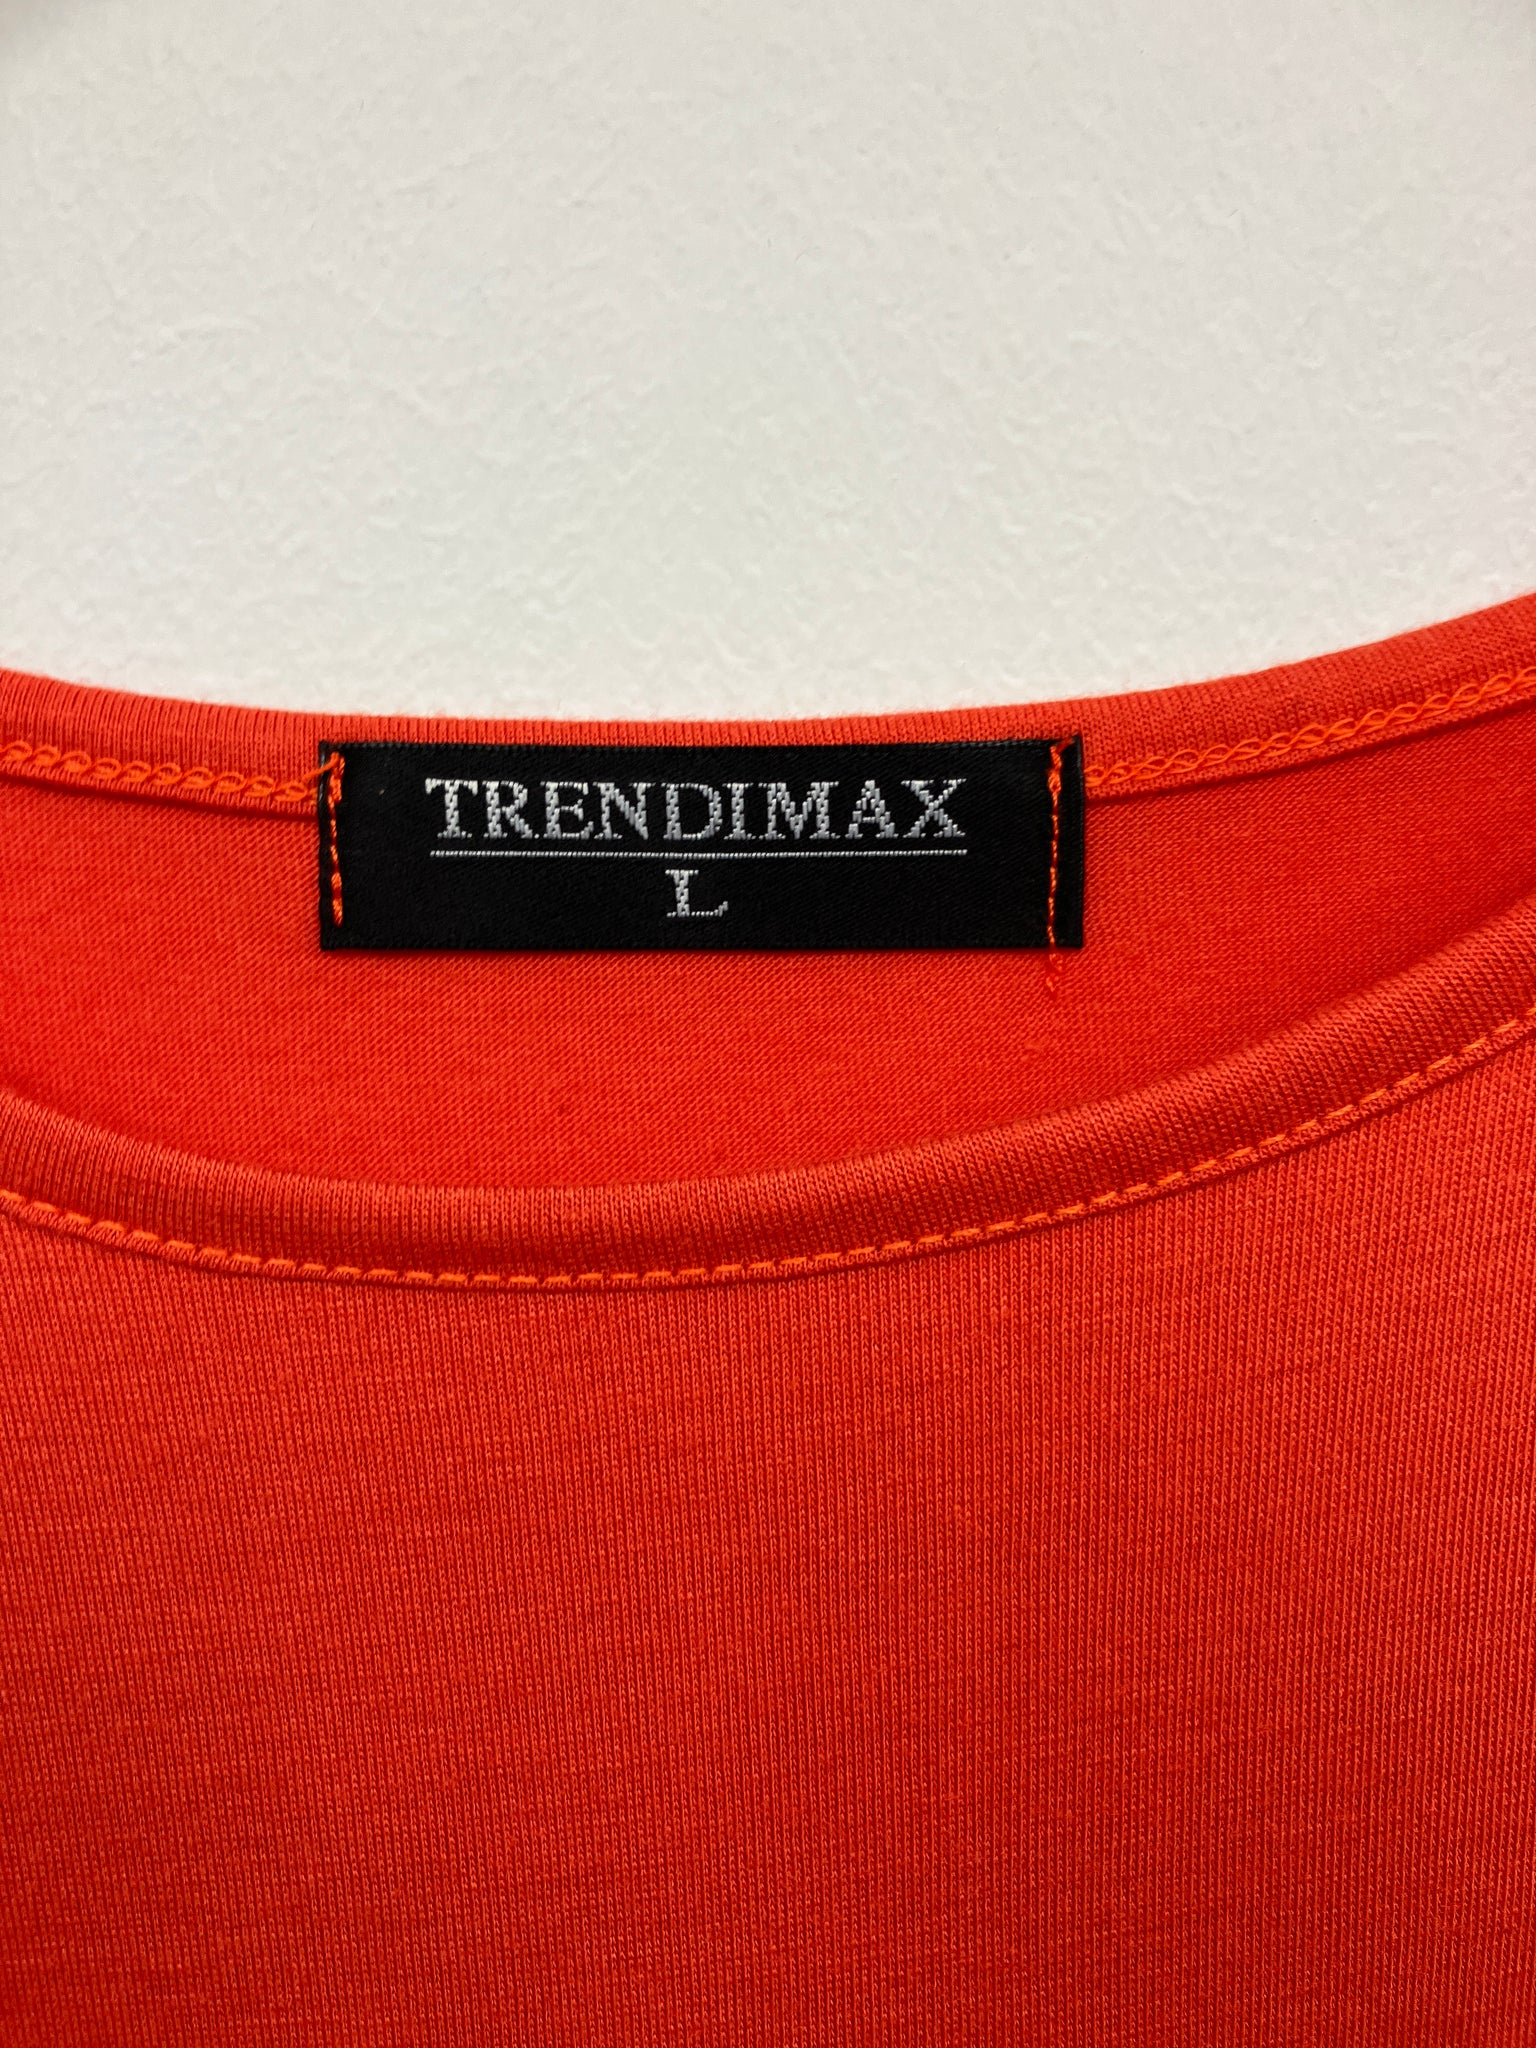 Trendimax t-shirts